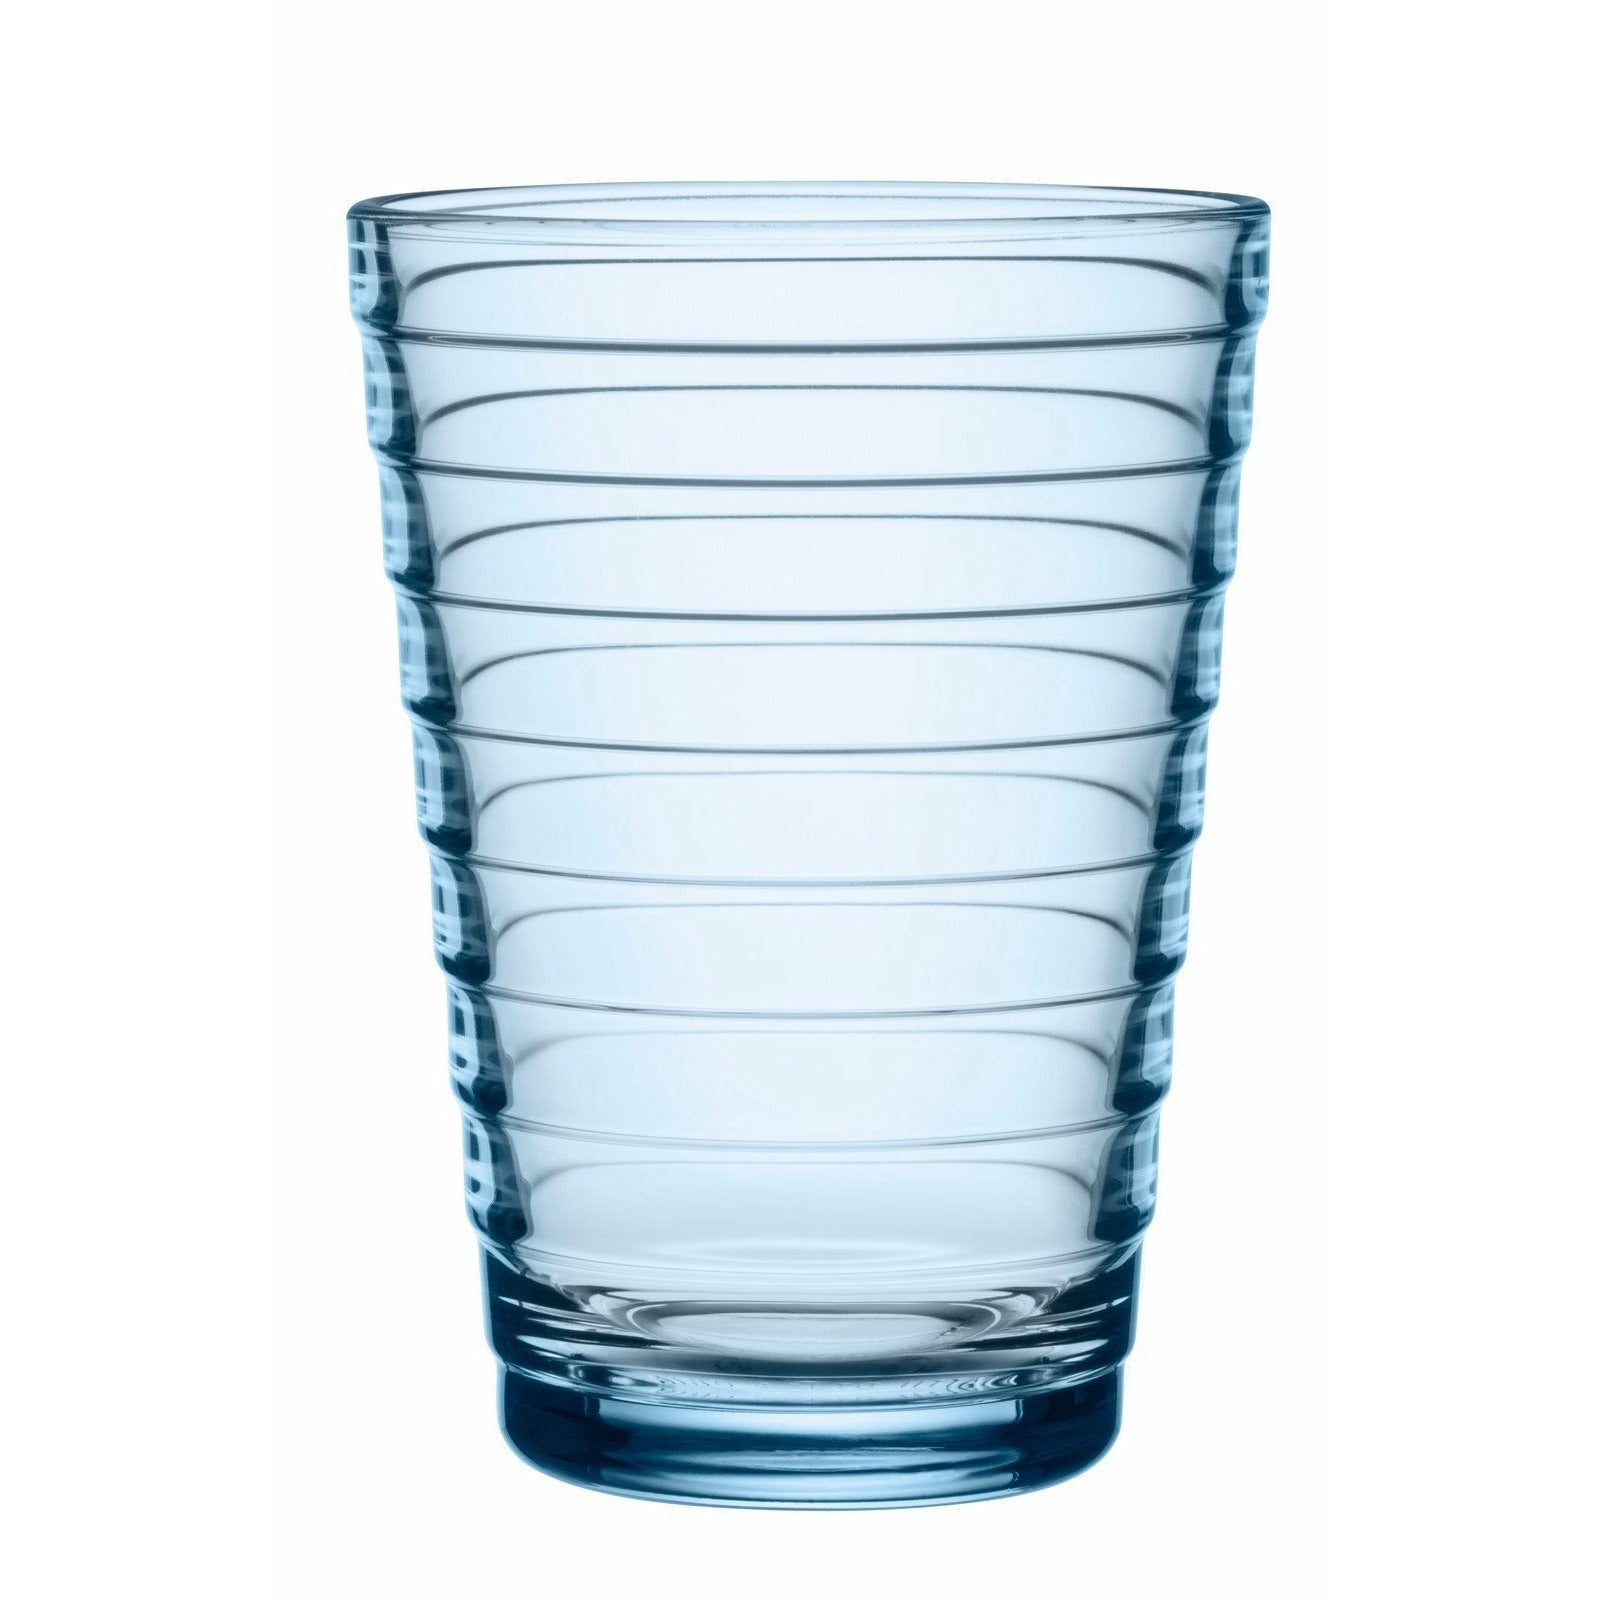 Iittala Aino Aalto Drinking Glass Aqua 33Cl, 2st.